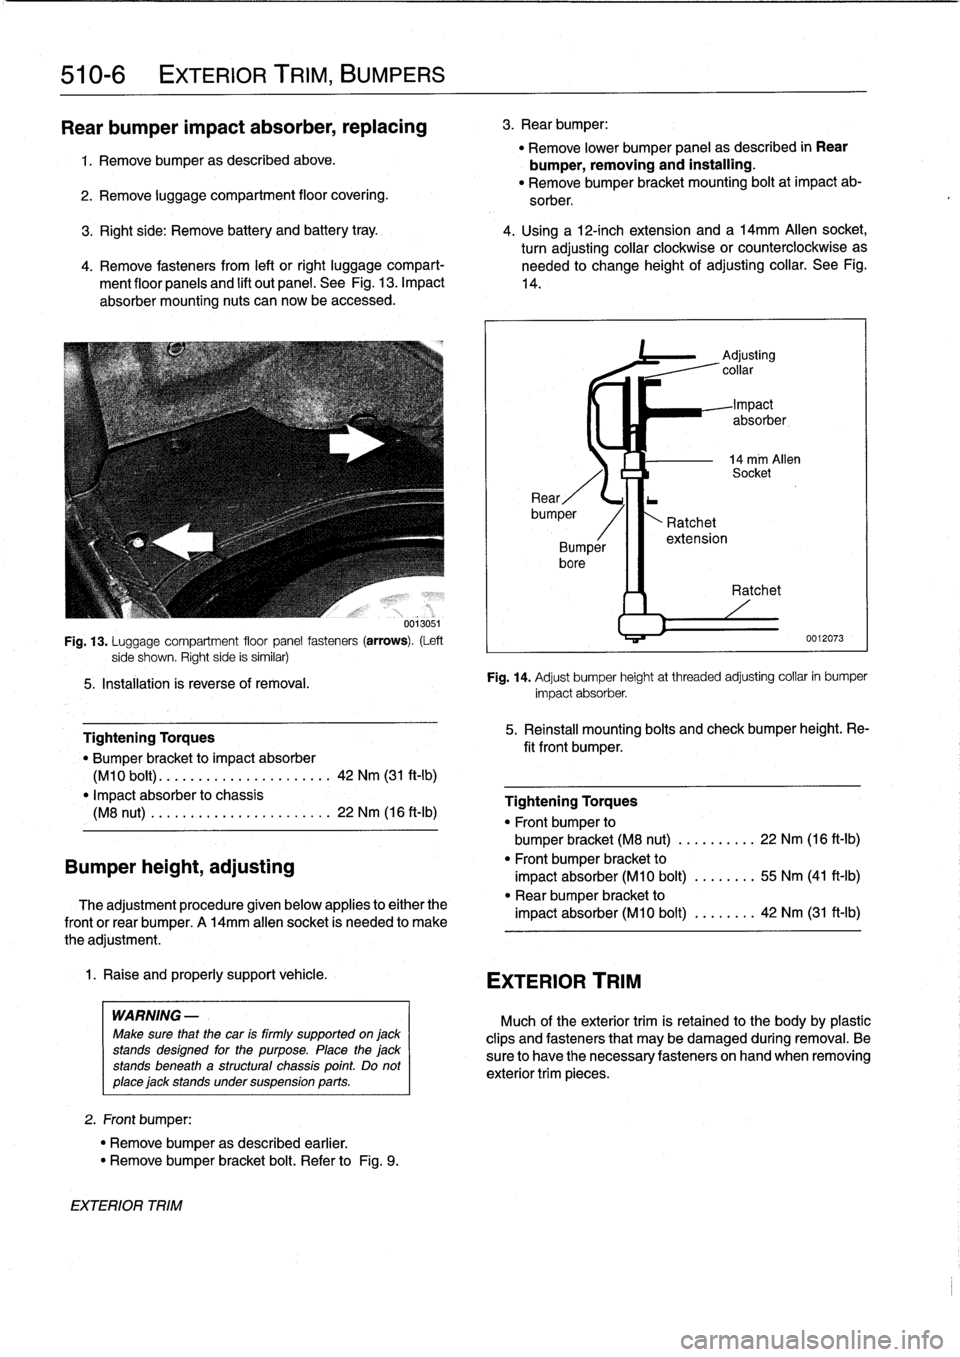 BMW 323i 1995 E36 Workshop Manual 
510-
6

	

EXTERIOR
TRIM,
BUMPERS

Rear
bumper
impact
absorber,replacing

1
.
Remove
bumperas
described
above
.

2
.
Remove
luggage
compartment
floor
covering
.

Fig
.
13
.
Luggage
compartment
floor
